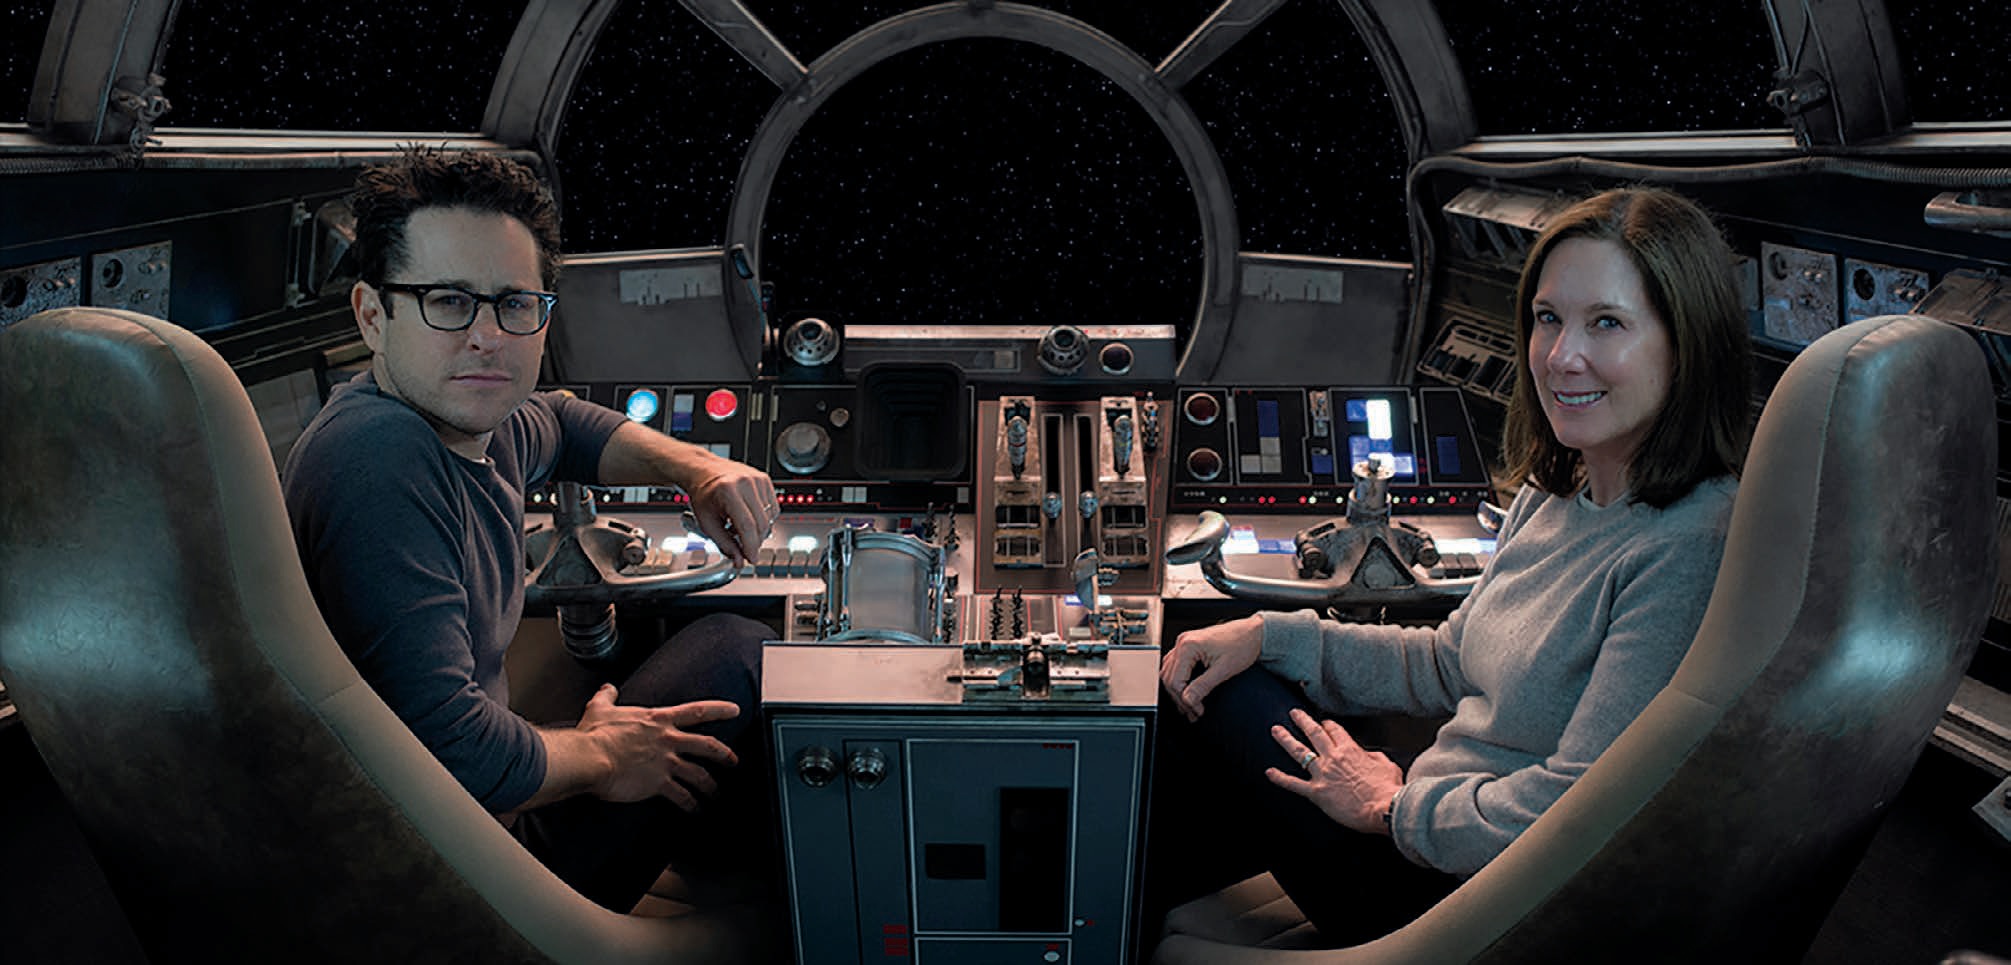 Return of the J.J. The Force Awakens’ director returns to helm Star Wars Episode IX 3